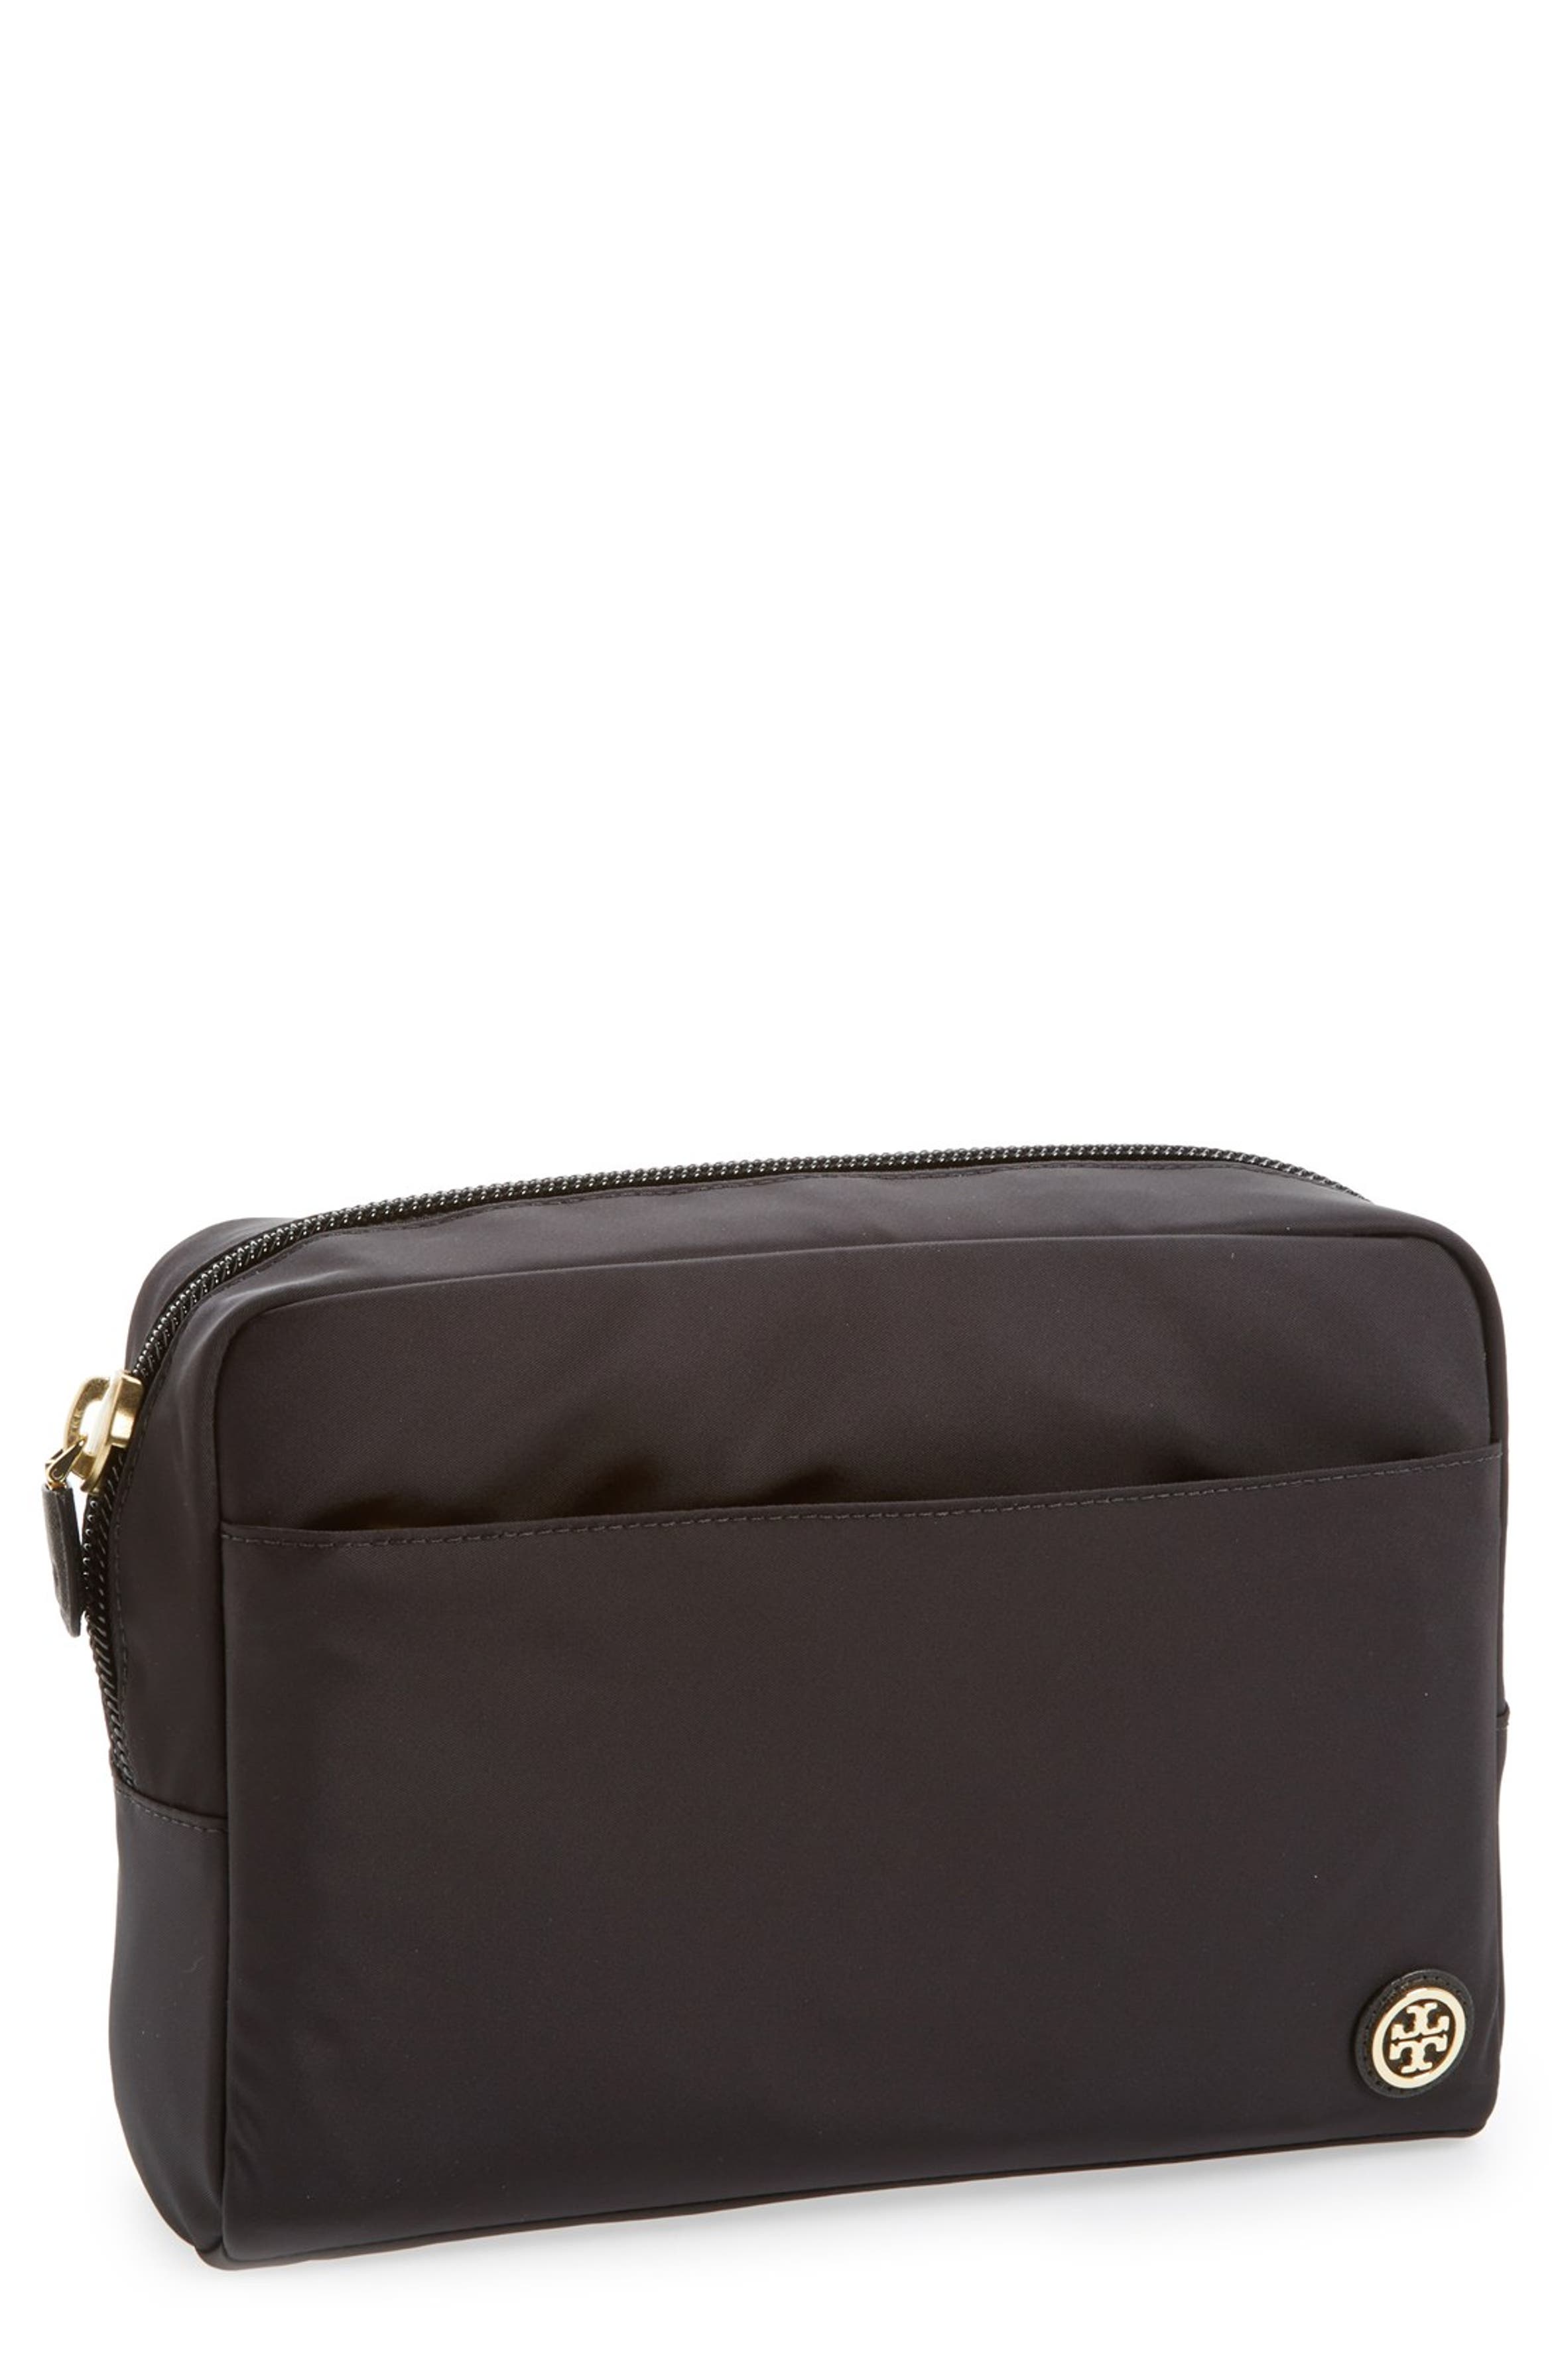 Tory Burch 'Travel Nylon - Large' Cosmetics Bag | Nordstrom